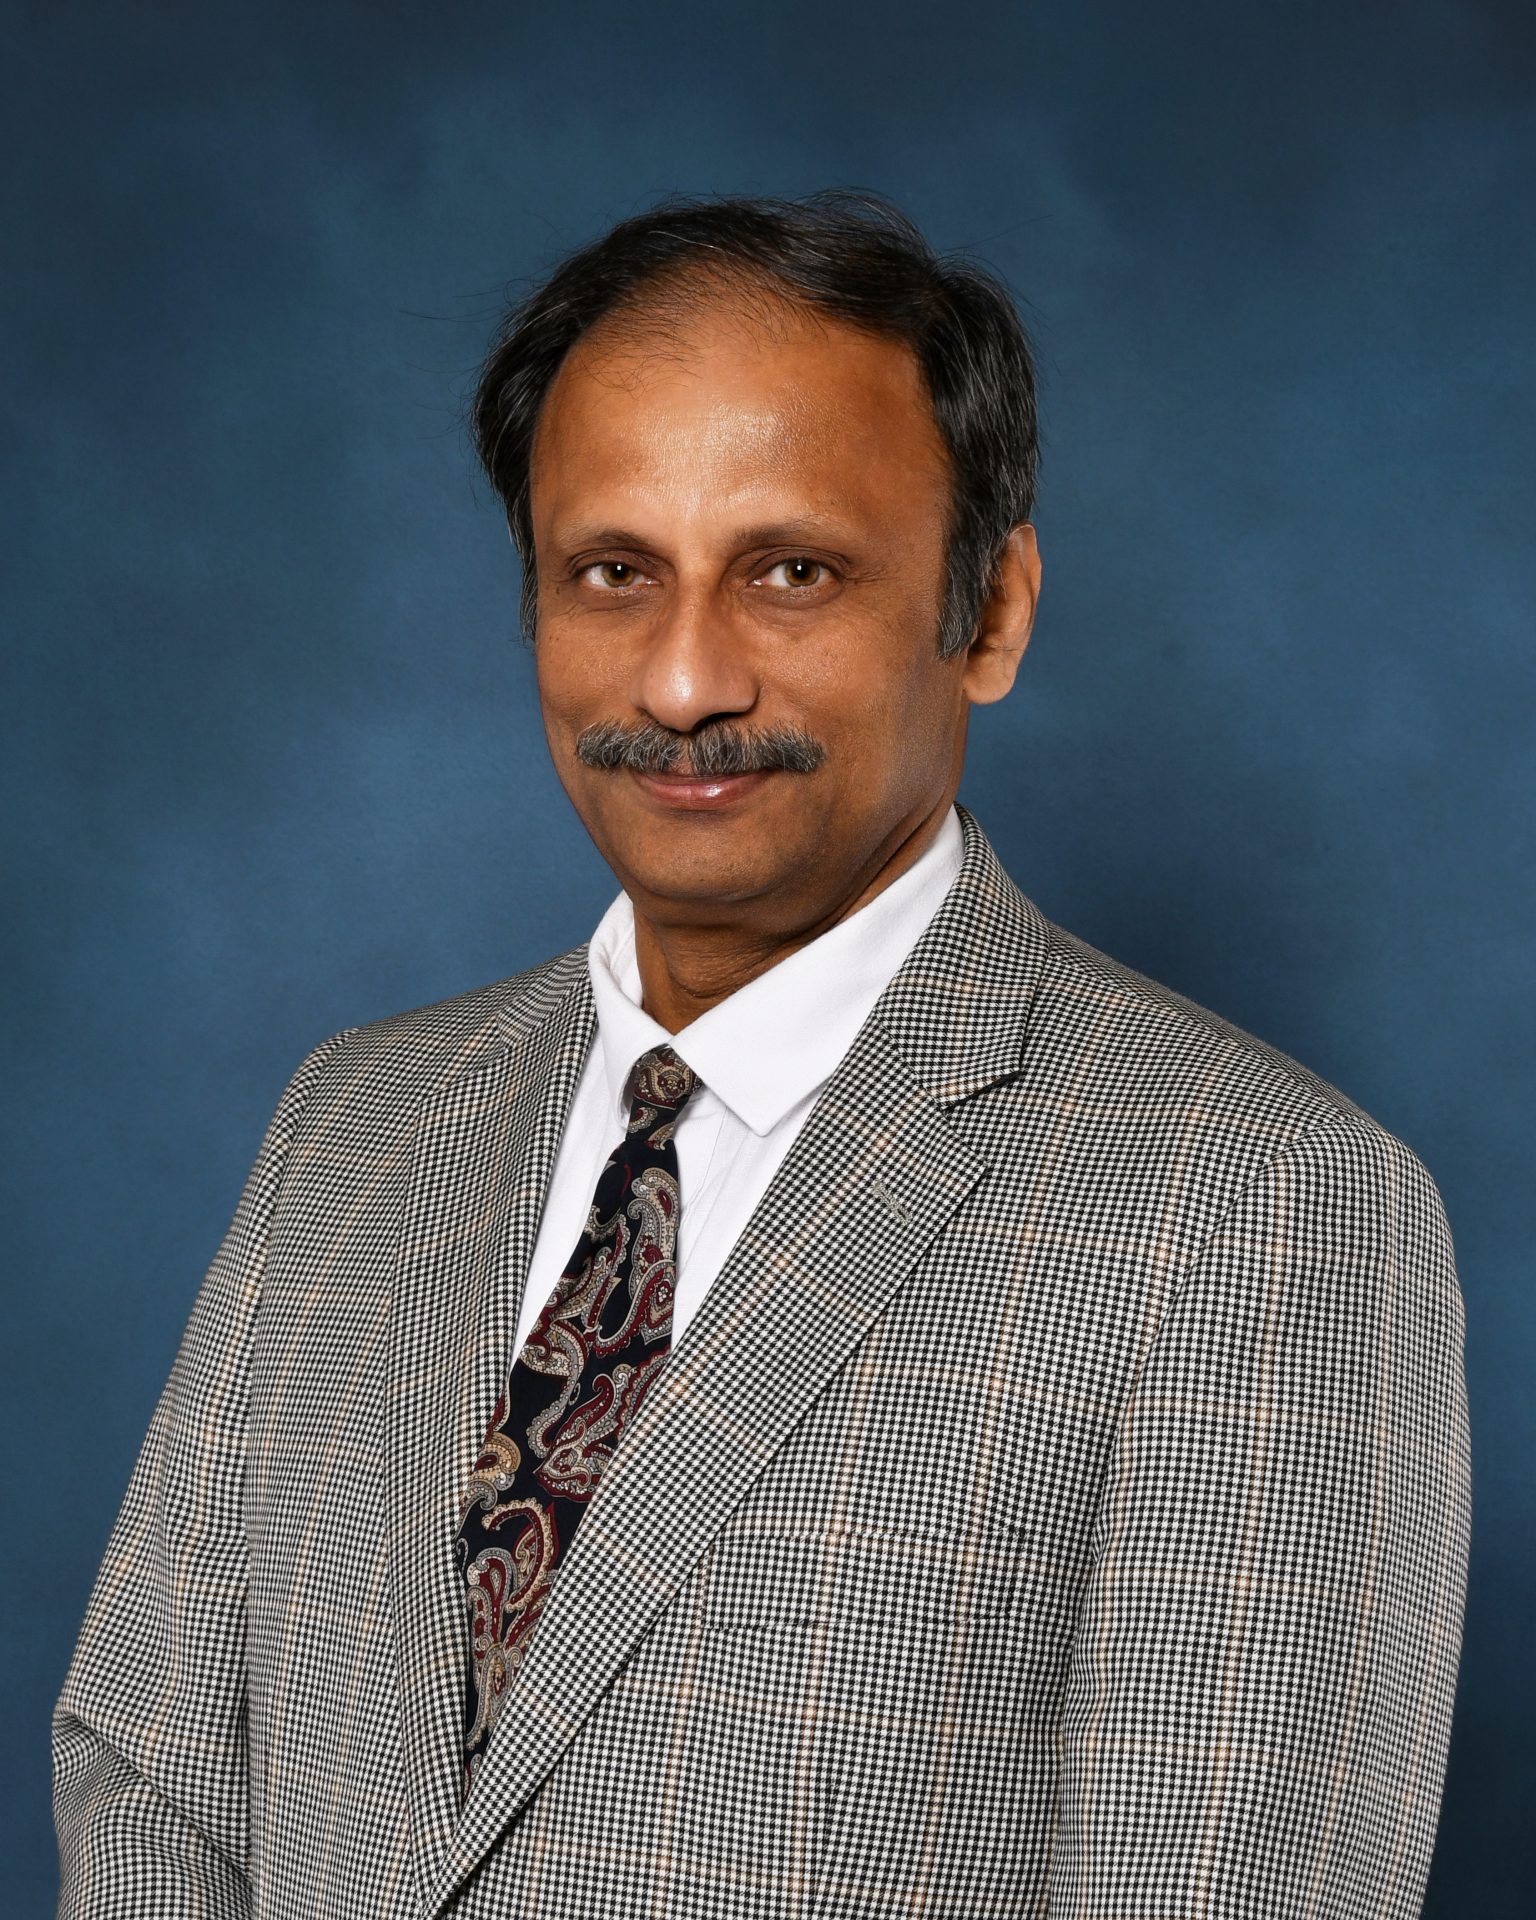 Dr Goswami